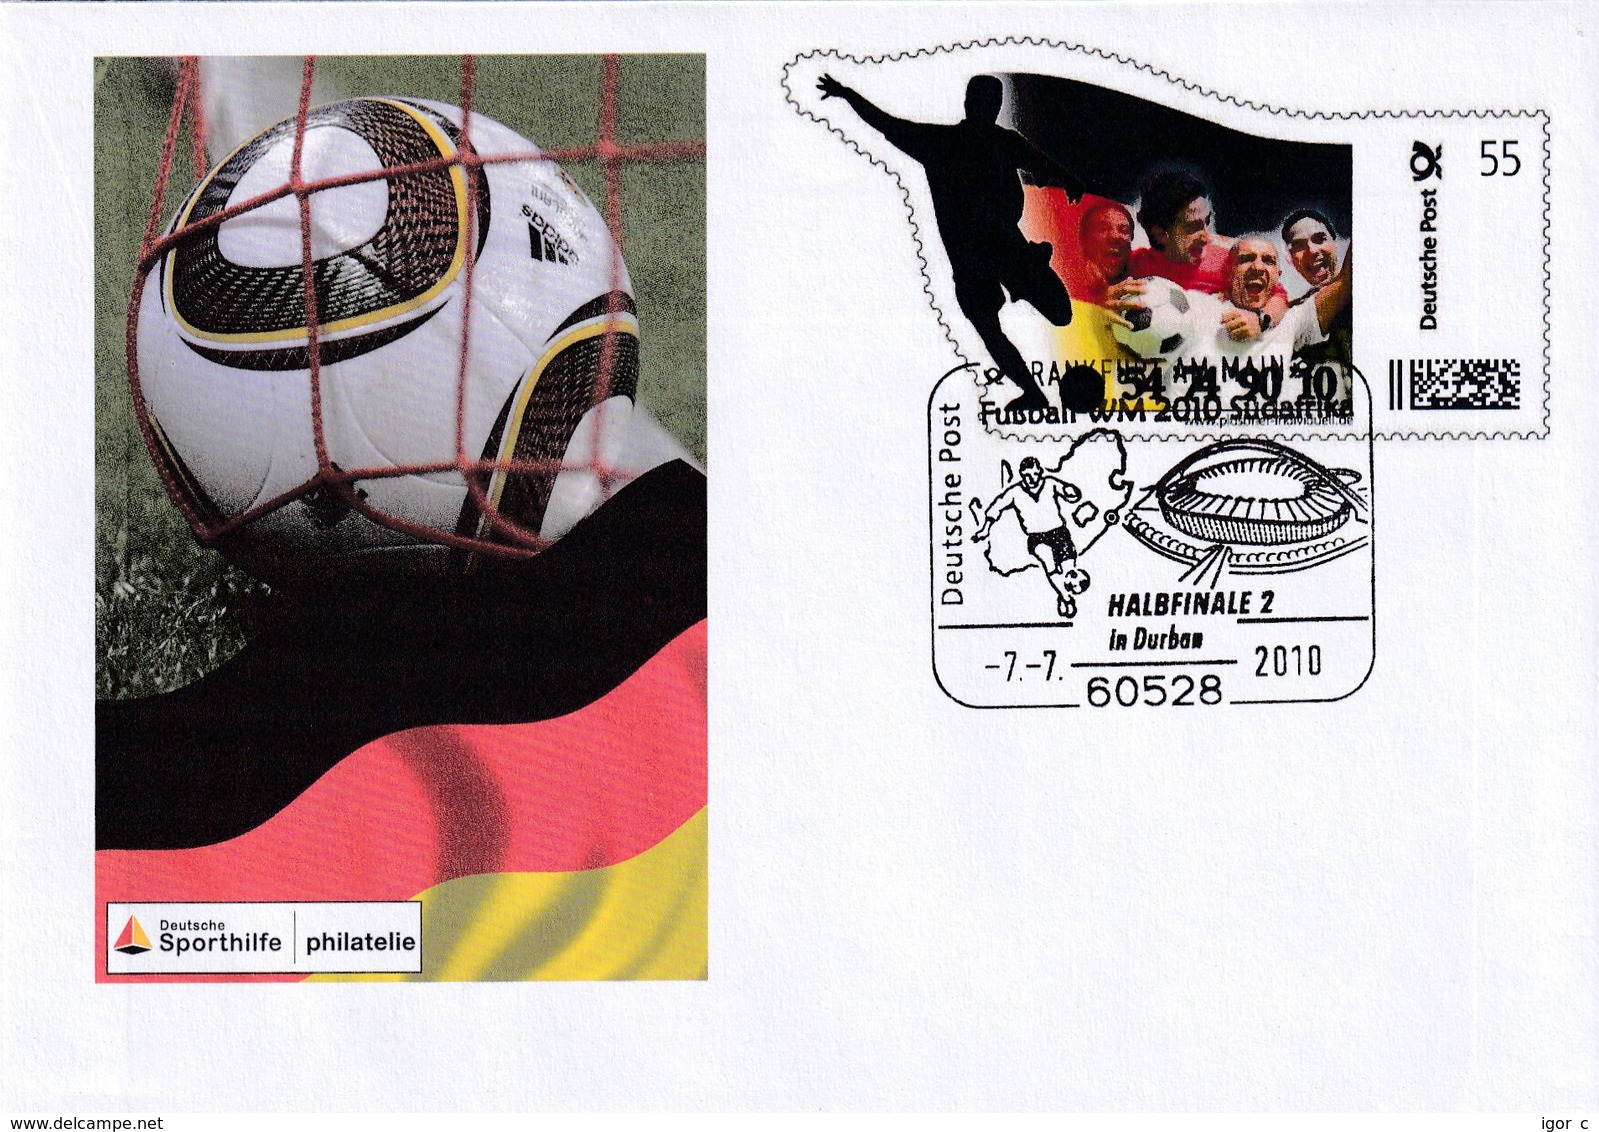 Germany 2010 Postal Stationery Cover: Football Fussball Soccer Calcio; FIFA World Cup; 1/2 Final Durban Stadium - 2010 – South Africa